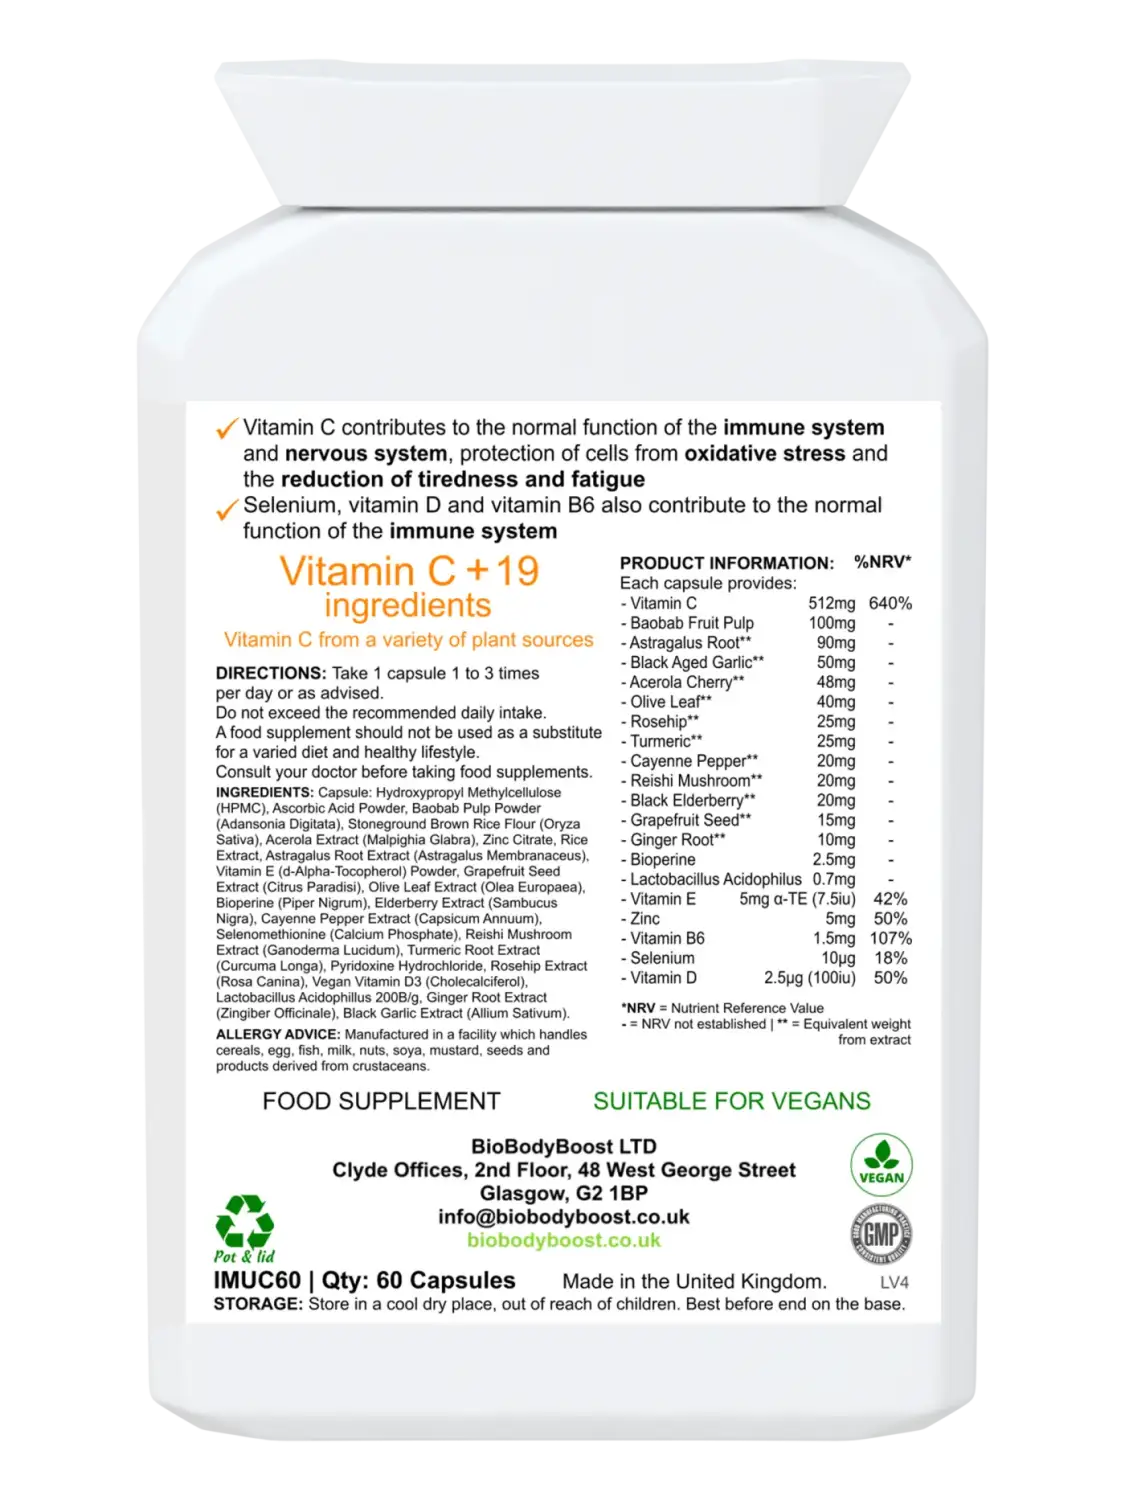 ImmuneBoost Vitamin C Complex - Vitamins & Supplements normal function reishi